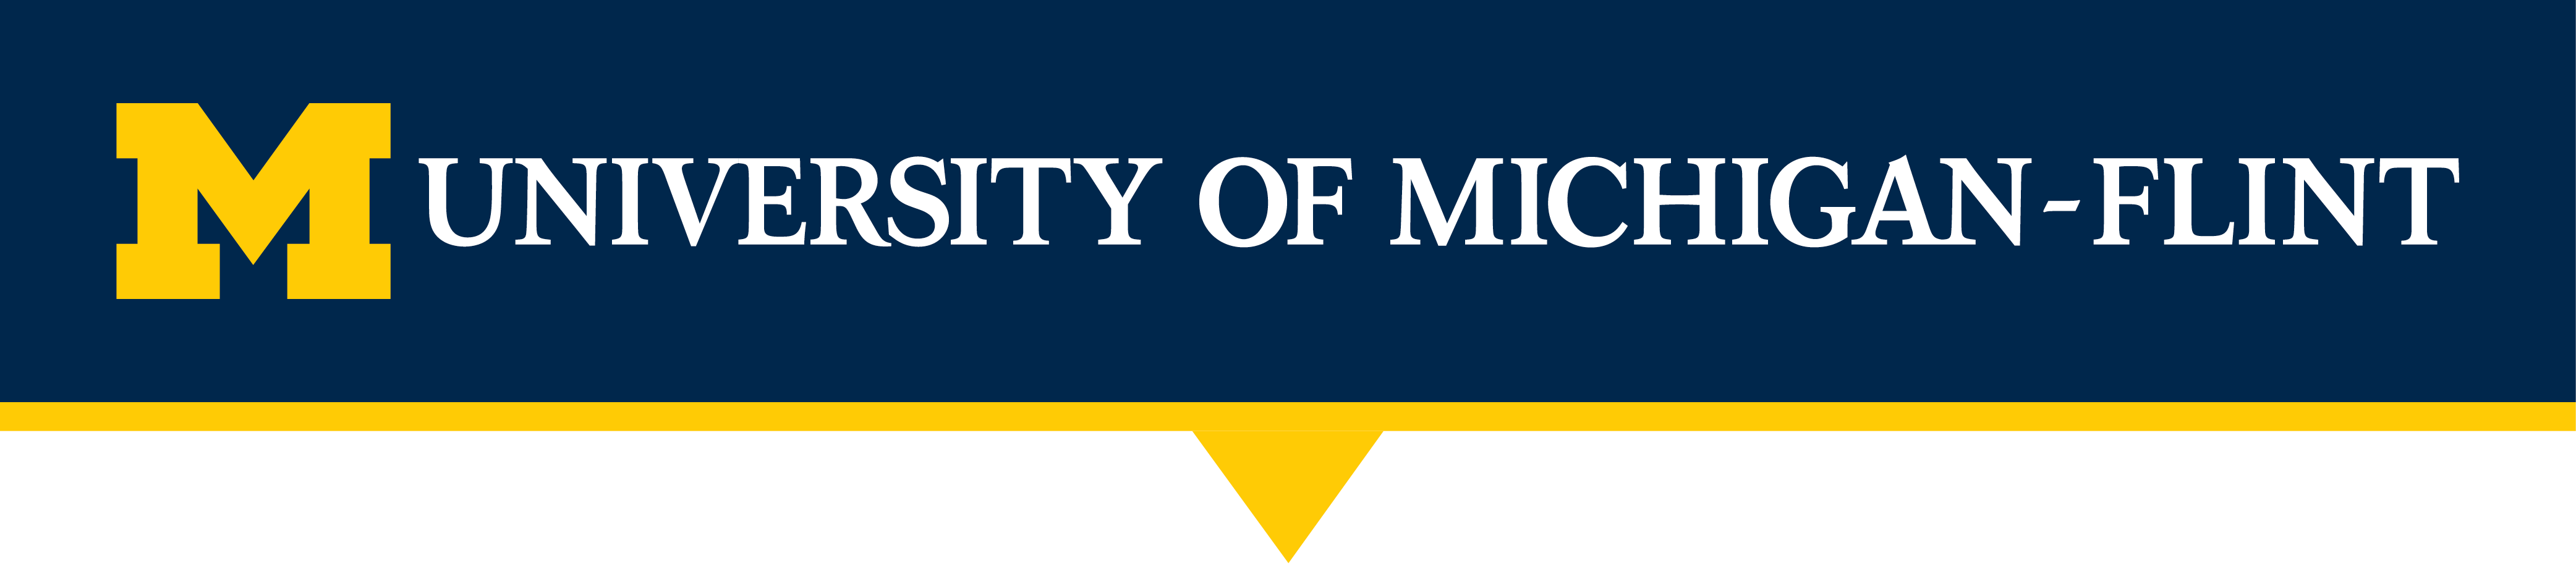 University of Michigan- Flint Request for Information